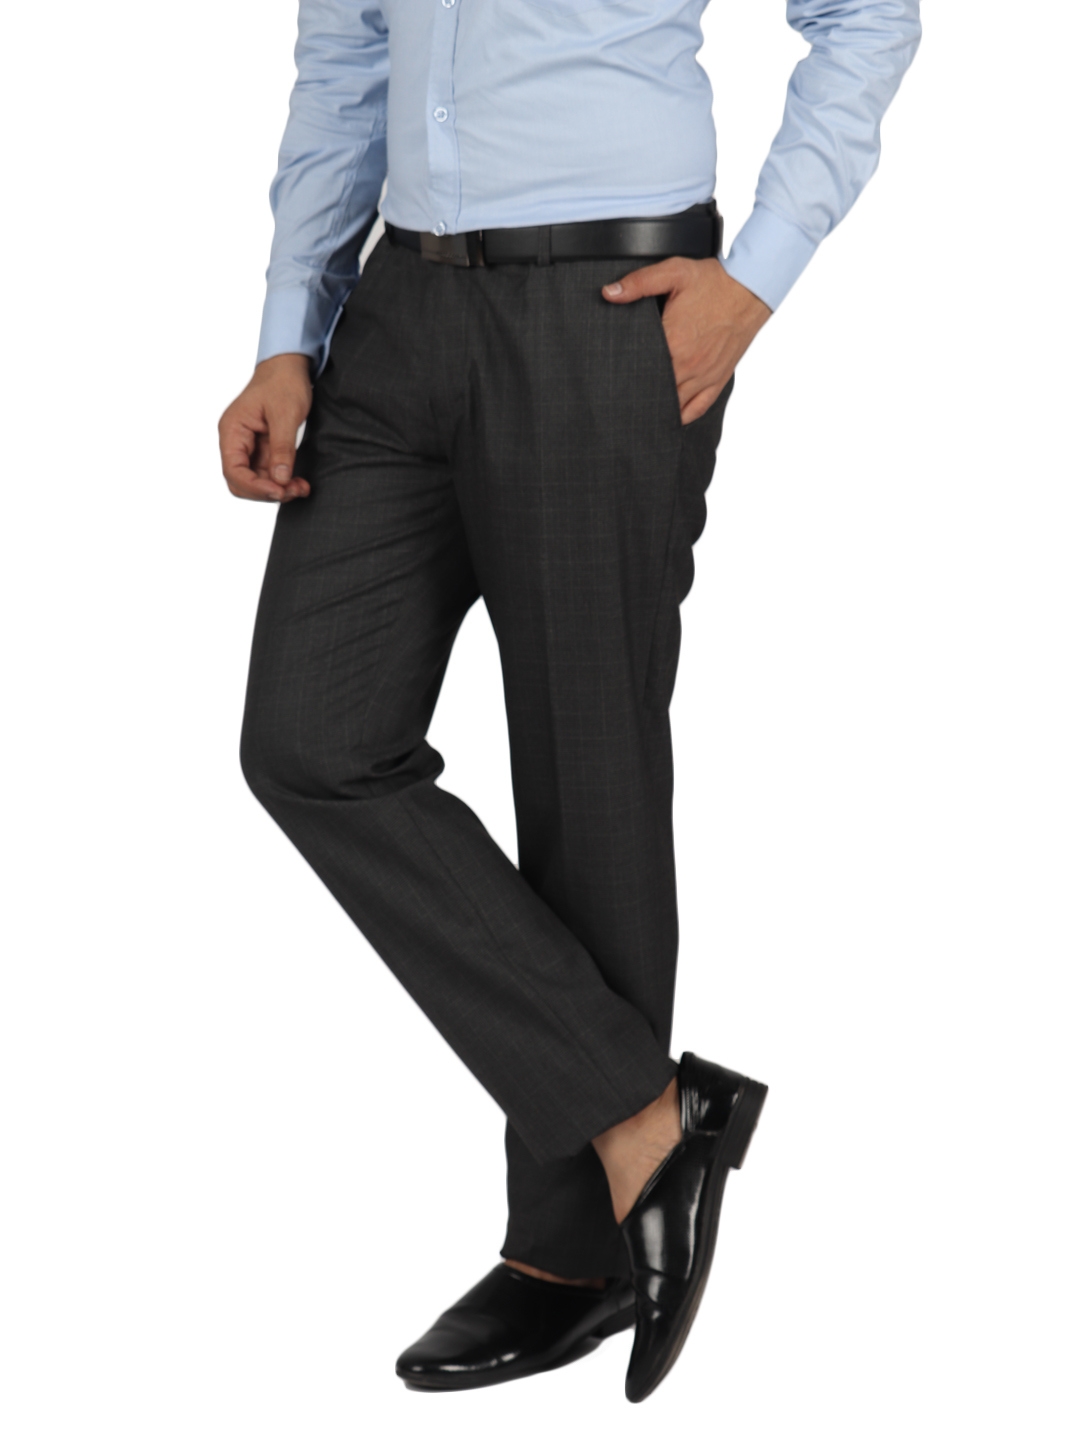 Men's Black Polyester Trousers